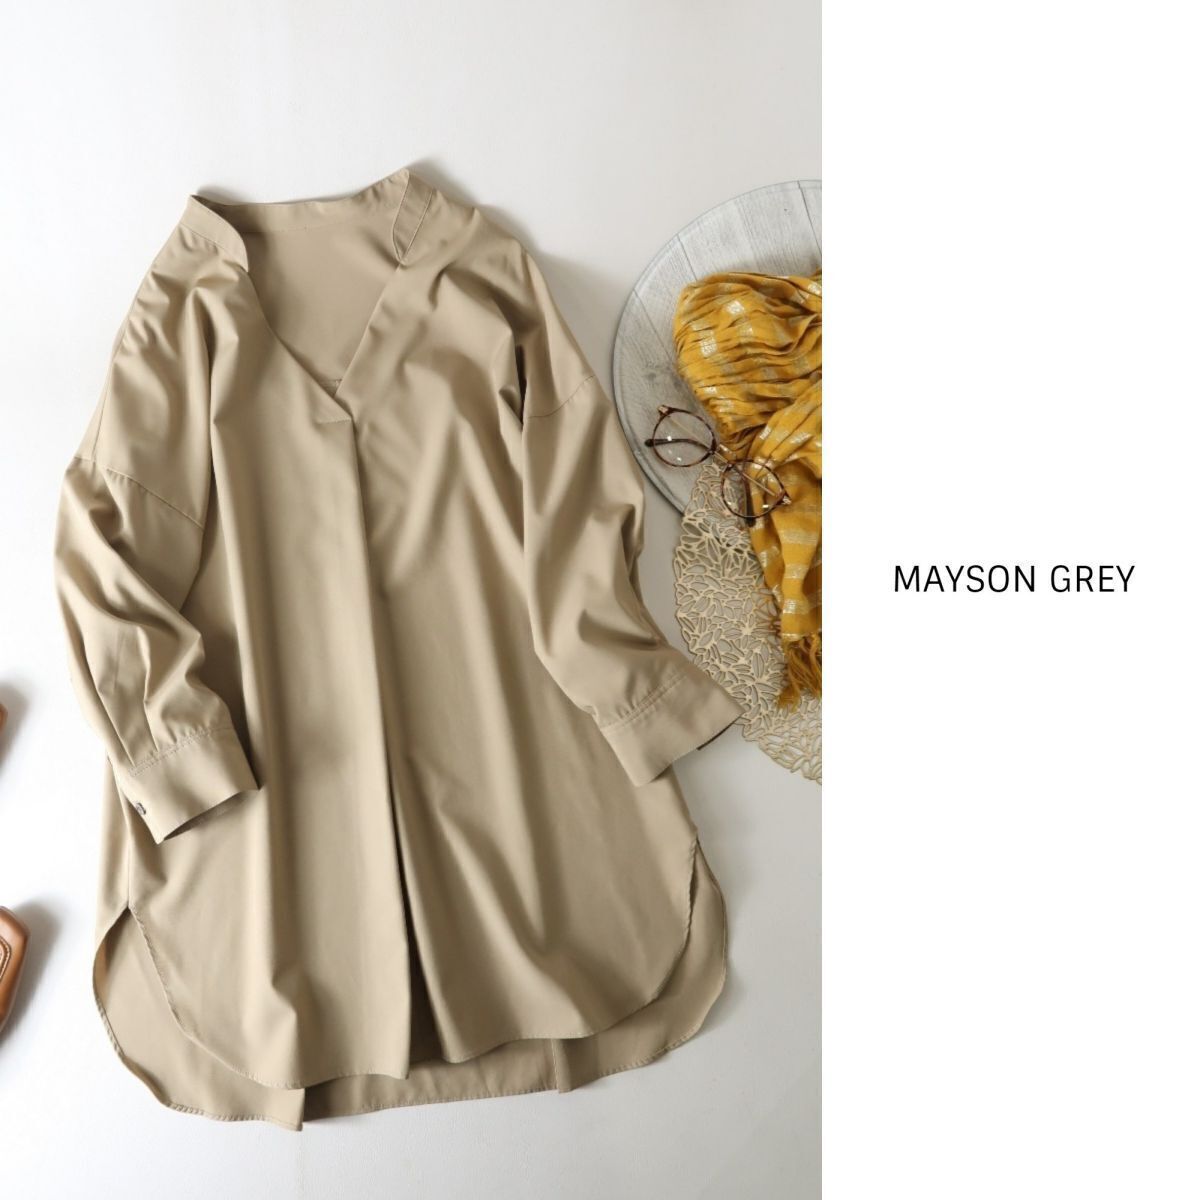  Mayson Grey MAYSON GREY*... bright loan shirt tunic shirt 2 size *A-O 1002